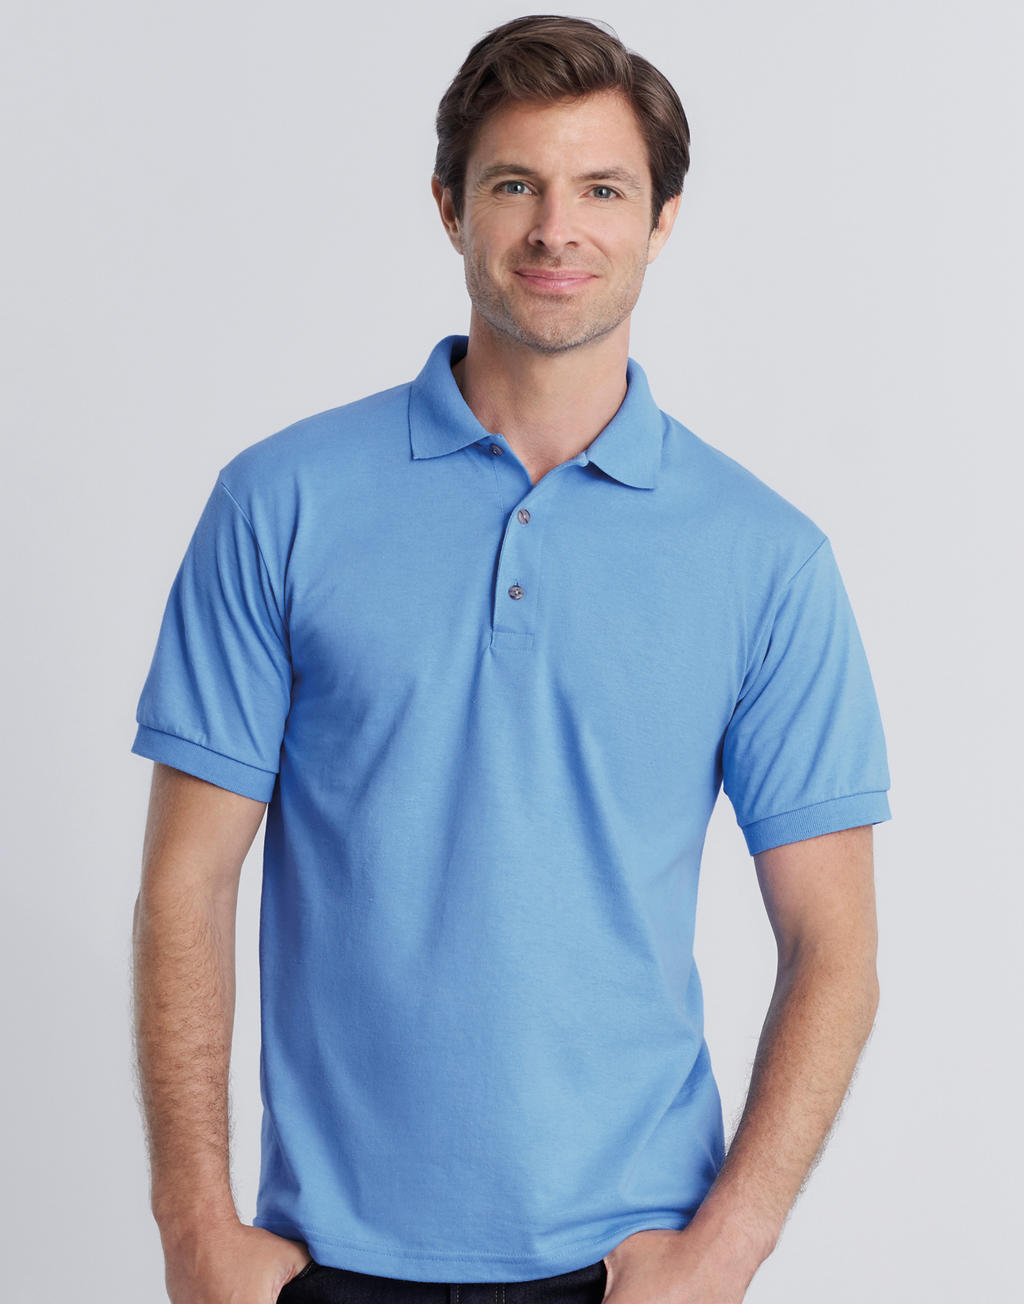 Gildan 8800 DryBlend Herren Jersey Polo kaufen | Basic-Shirts